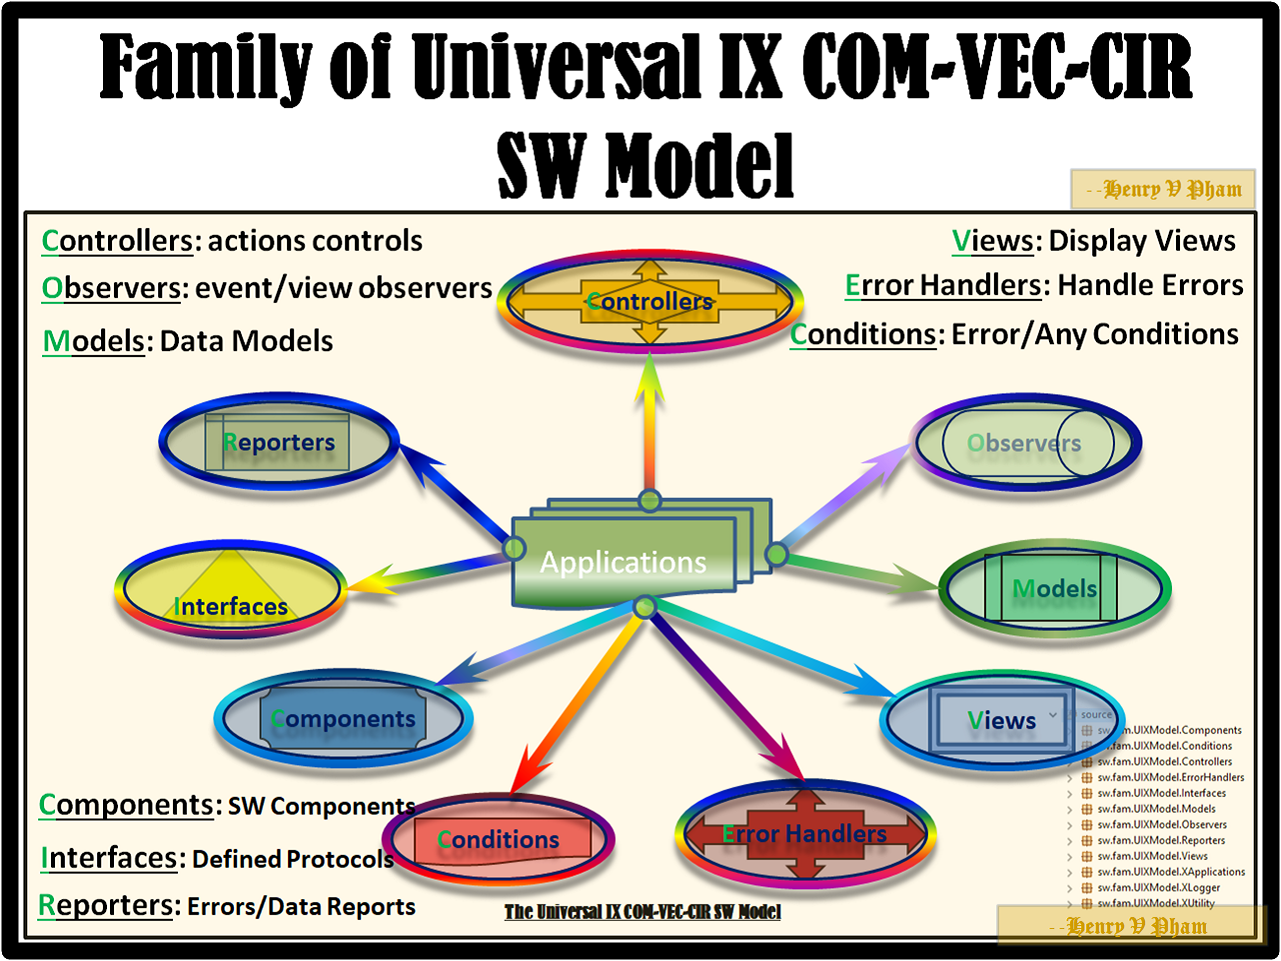 The UIX (U9 Common Vector Circles) SW Model Family